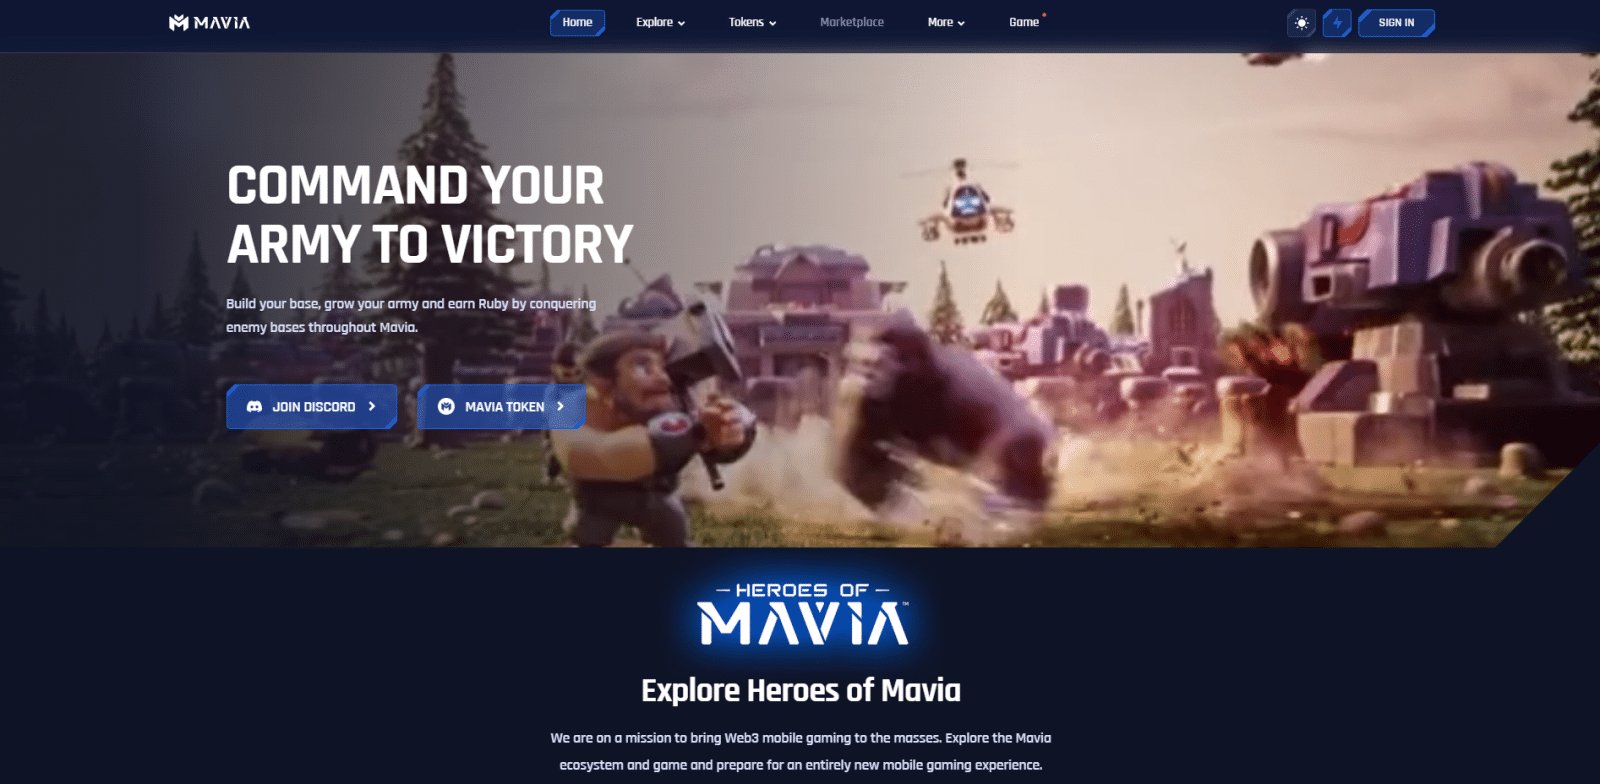 Printscreen da tela do projeto Heroes of Mavia